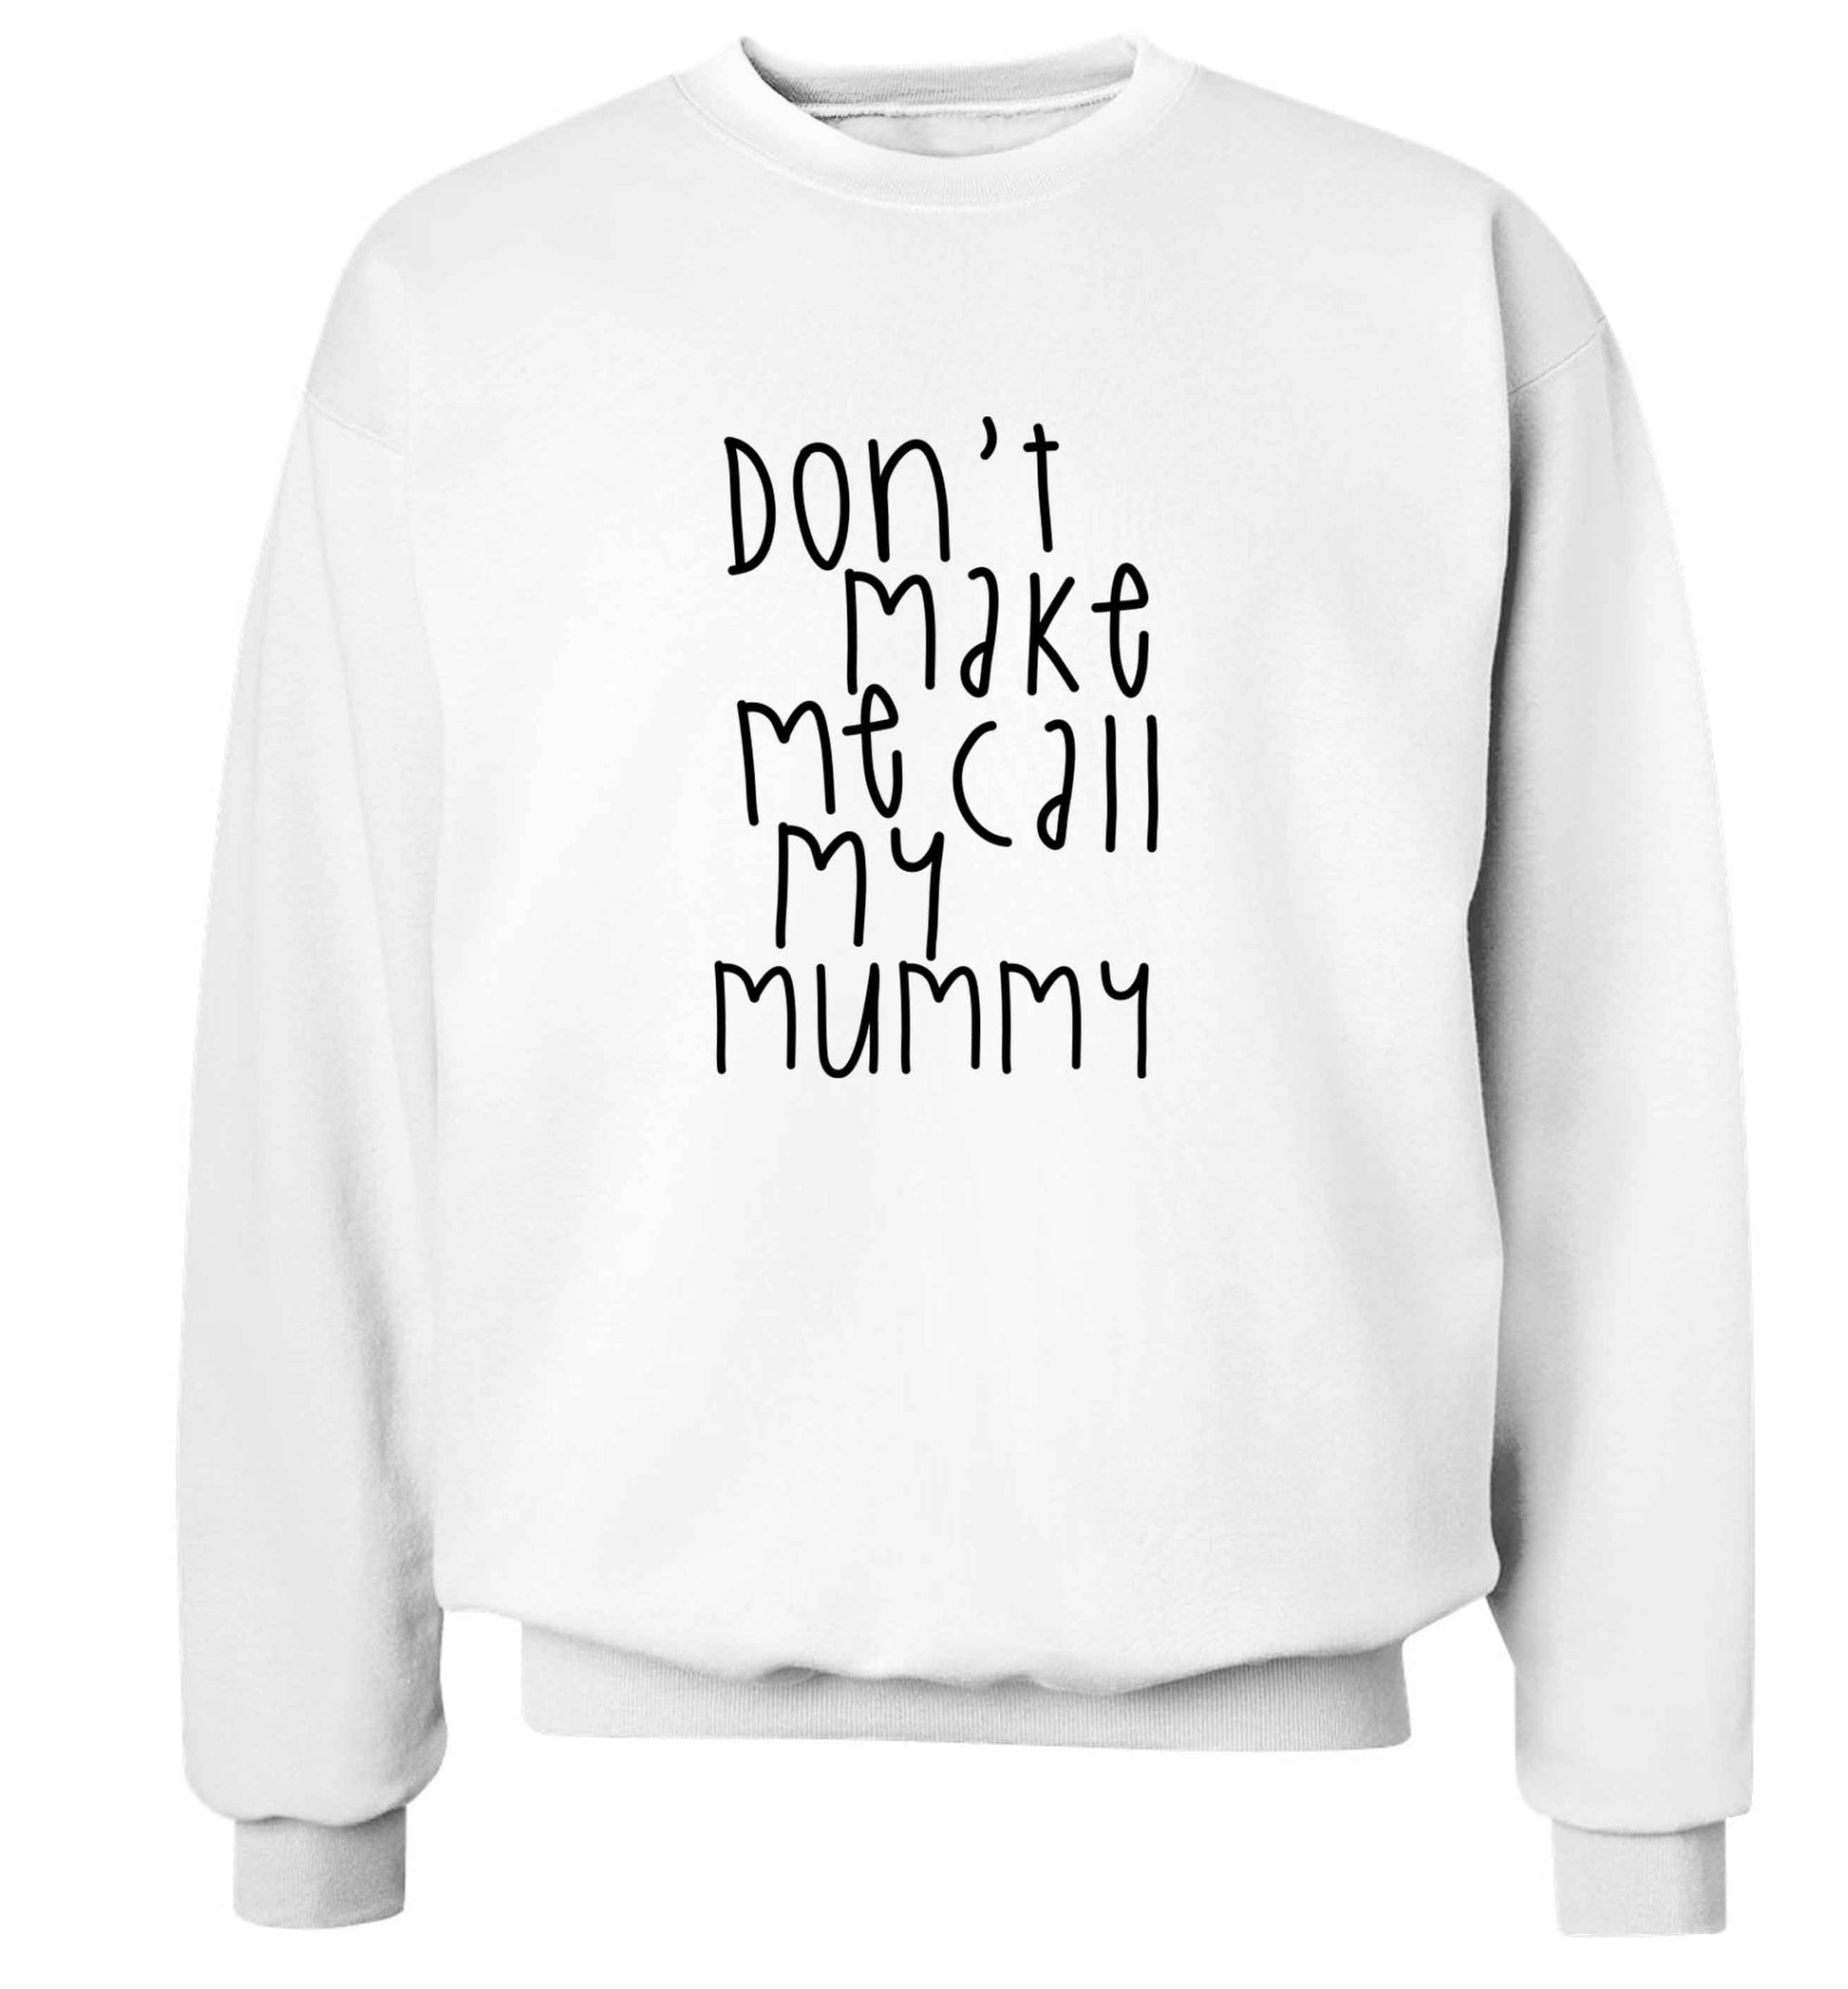 Don't make me call my mummy adult's unisex white sweater 2XL